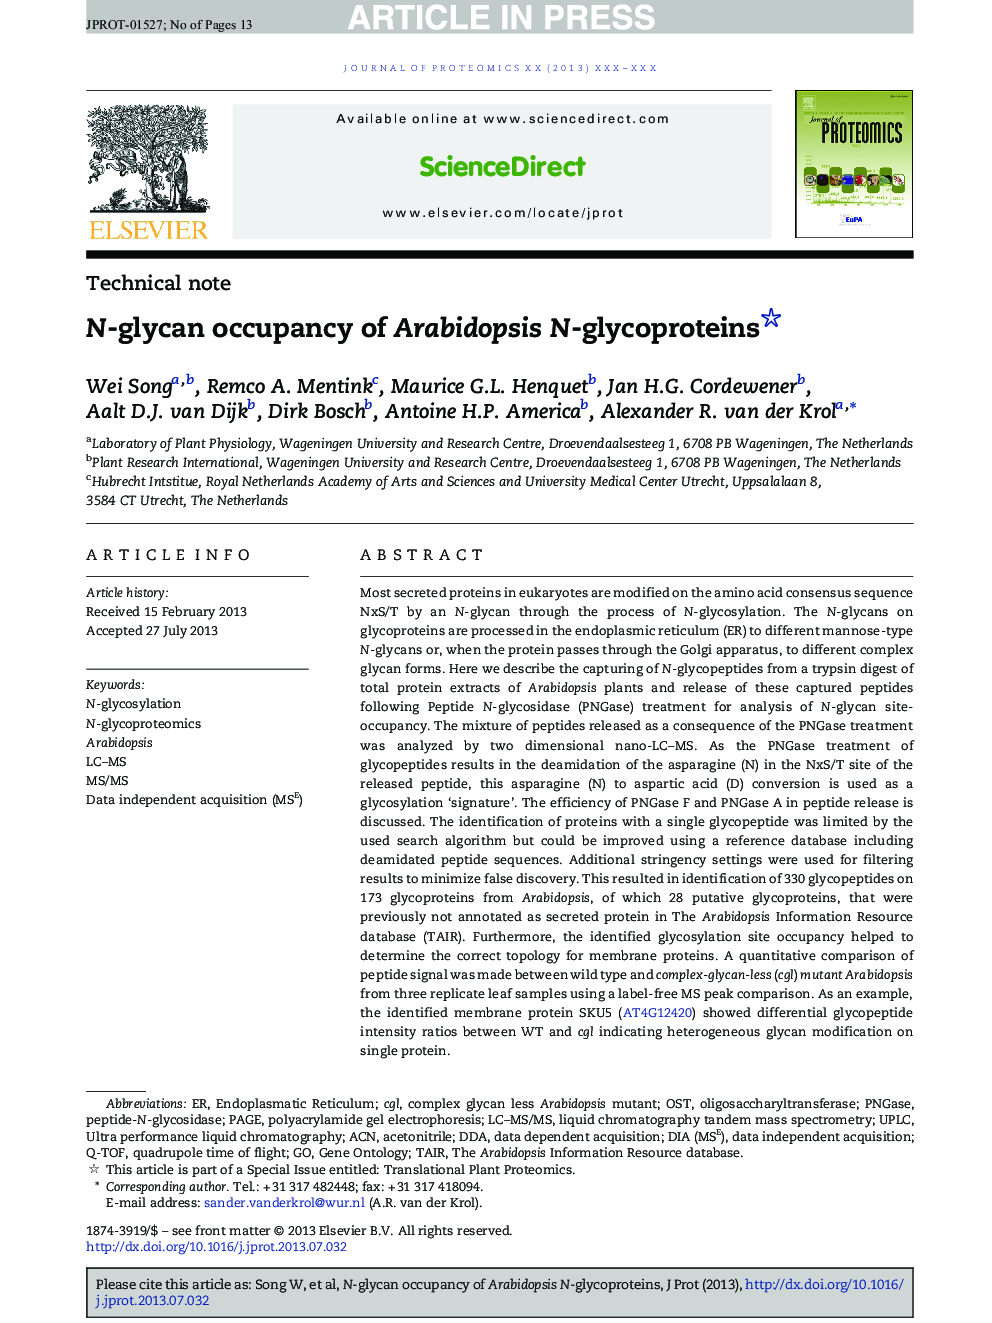 N-glycan occupancy of Arabidopsis N-glycoproteins